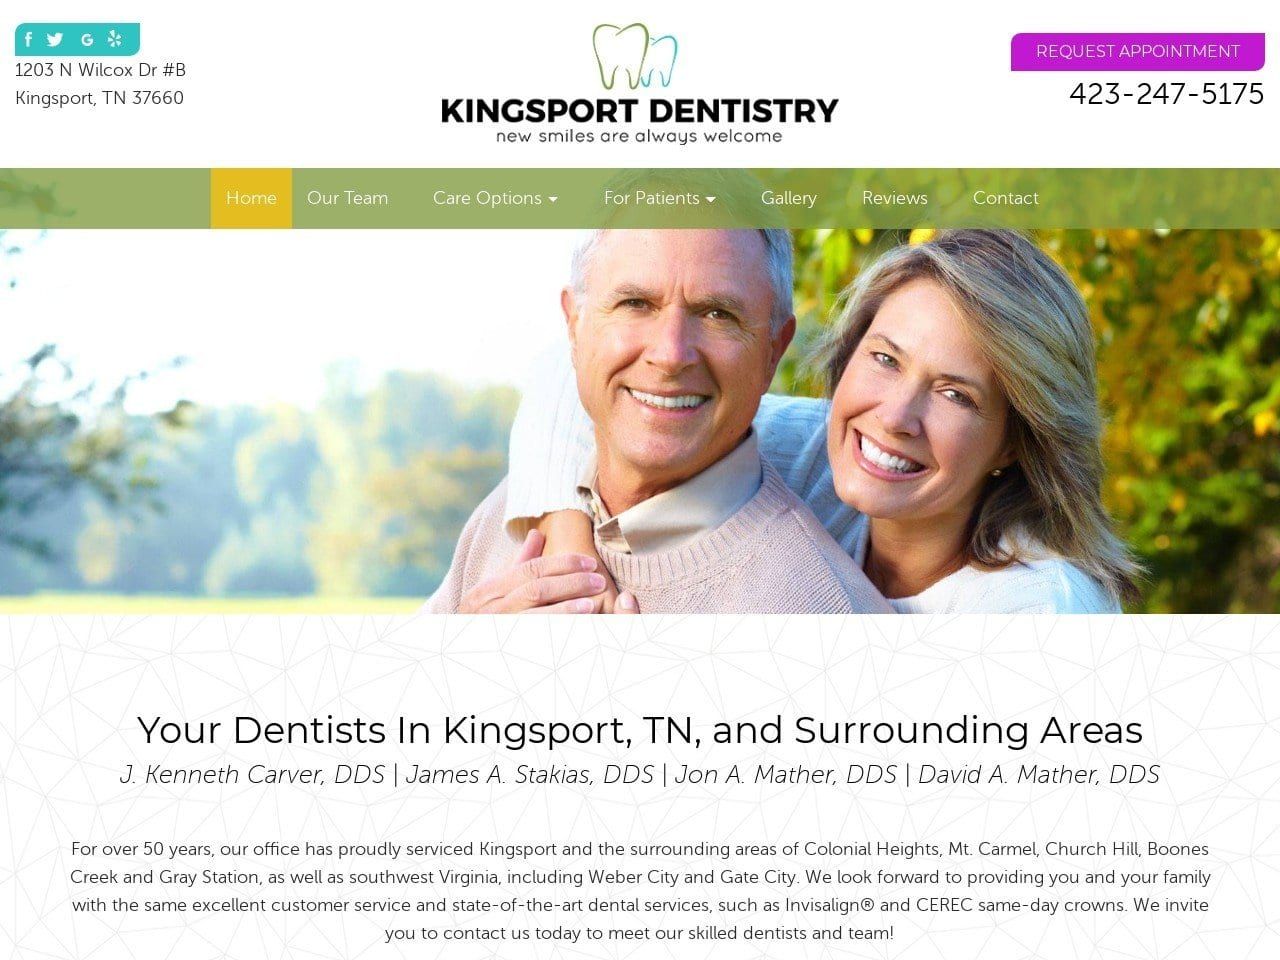 Aaa Dental Associates Website Screenshot from kingsportdentistry.com